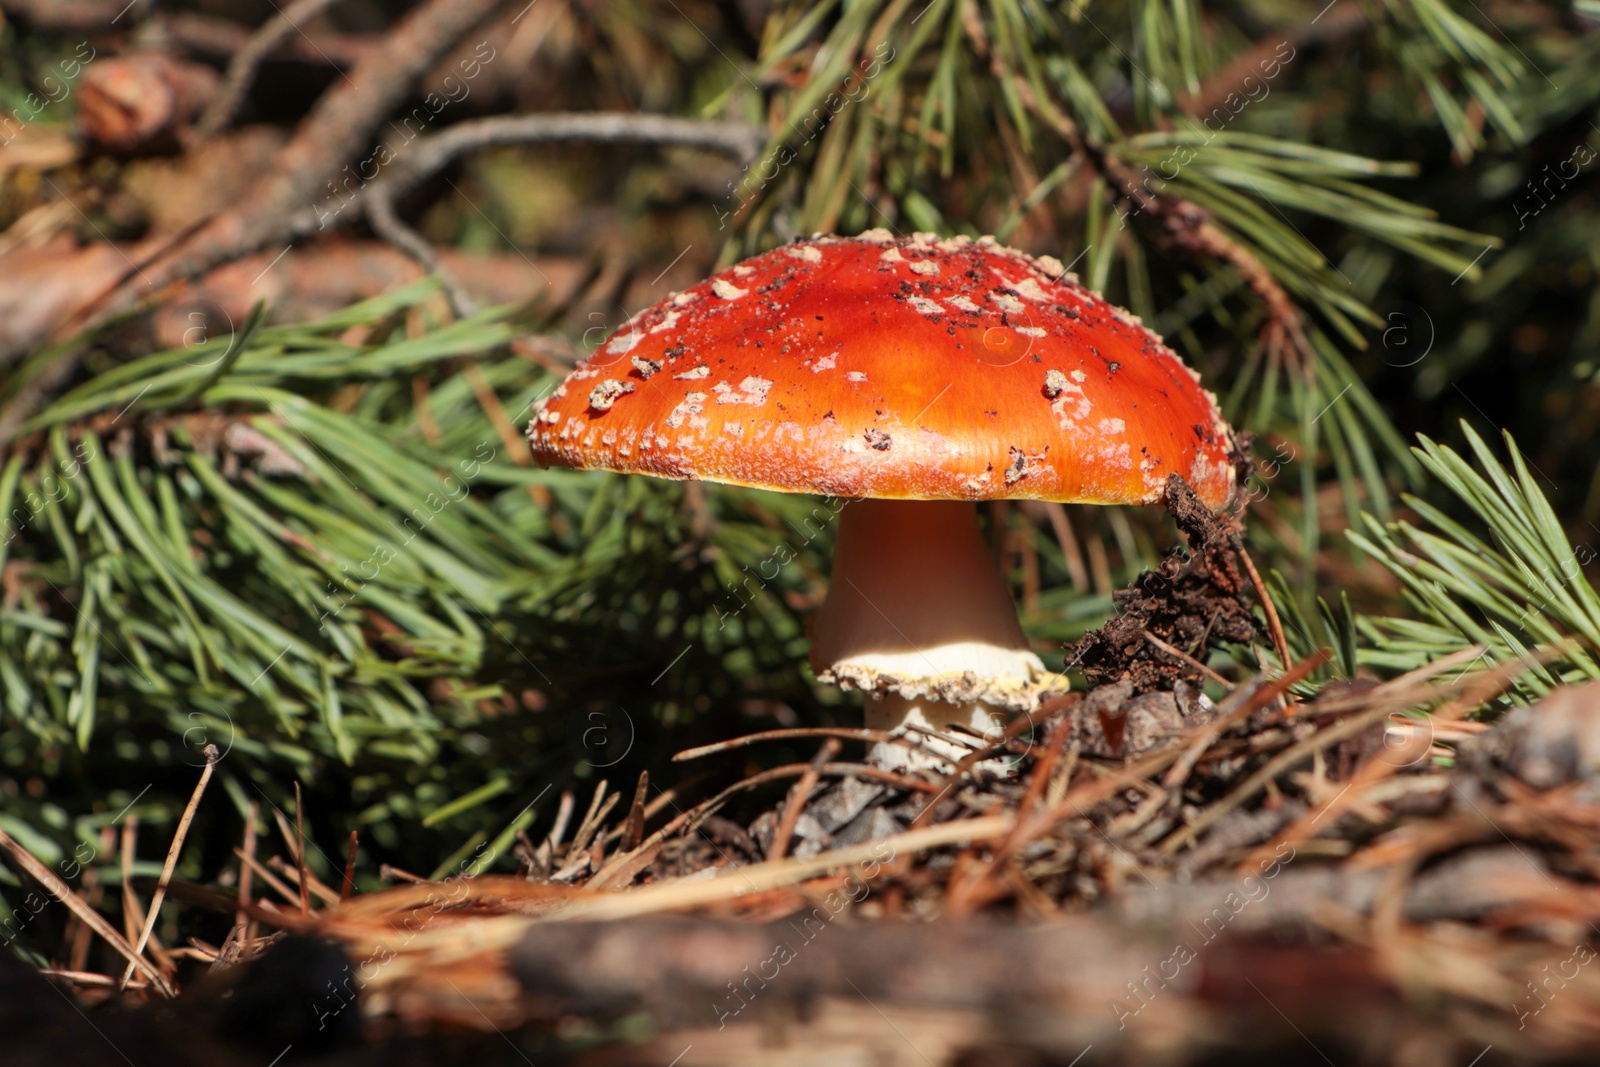 Photo of Fresh wild mushroom growing near spruce tree in forest, closeup